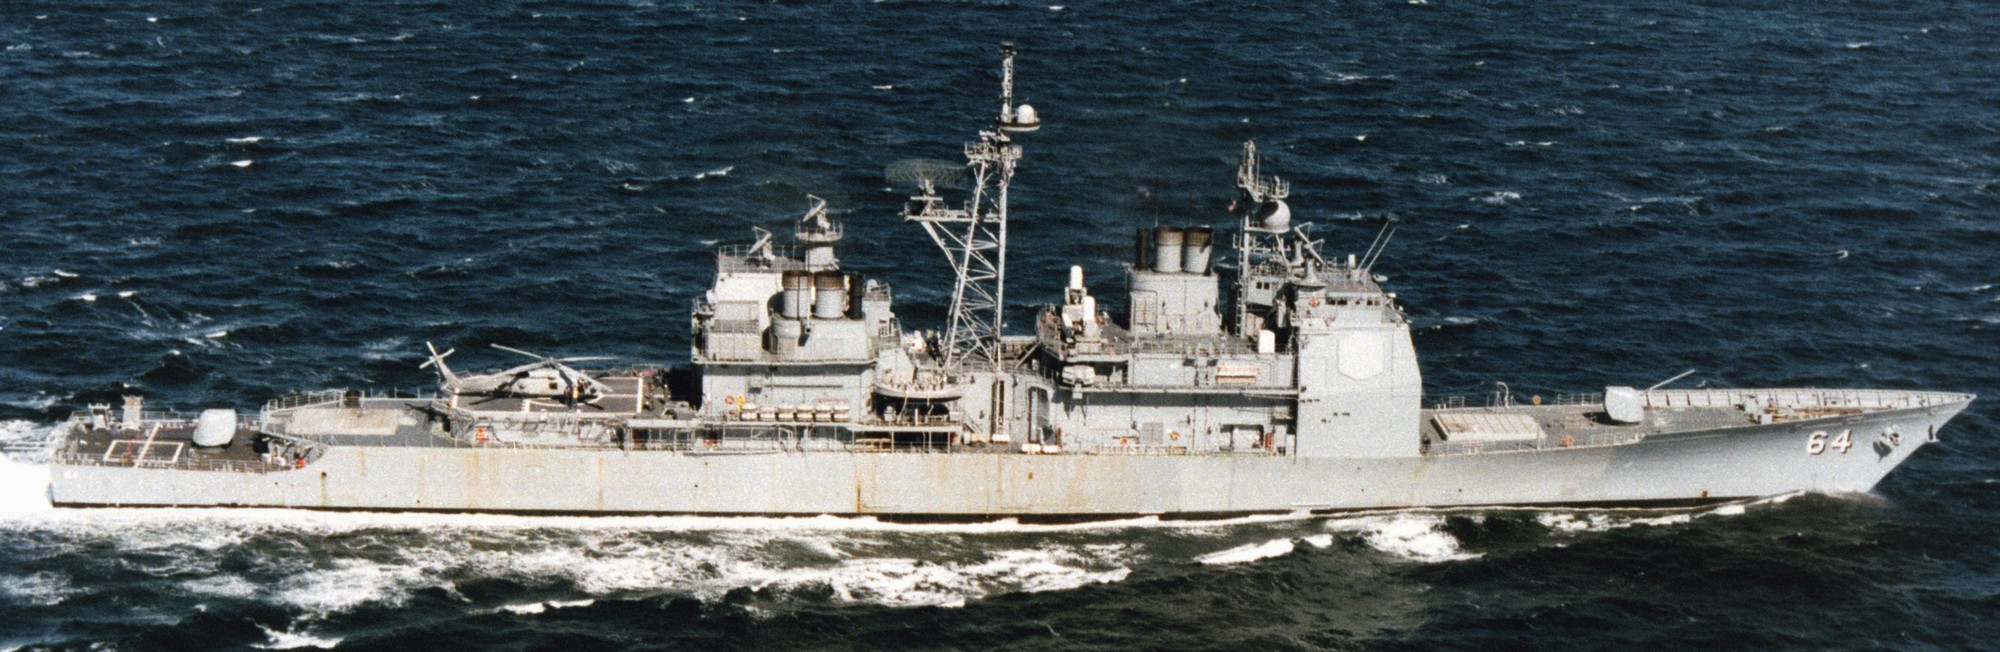 cg-64 uss gettysburg ticonderoga class guided missile cruiser aegis us navy sea trials 67